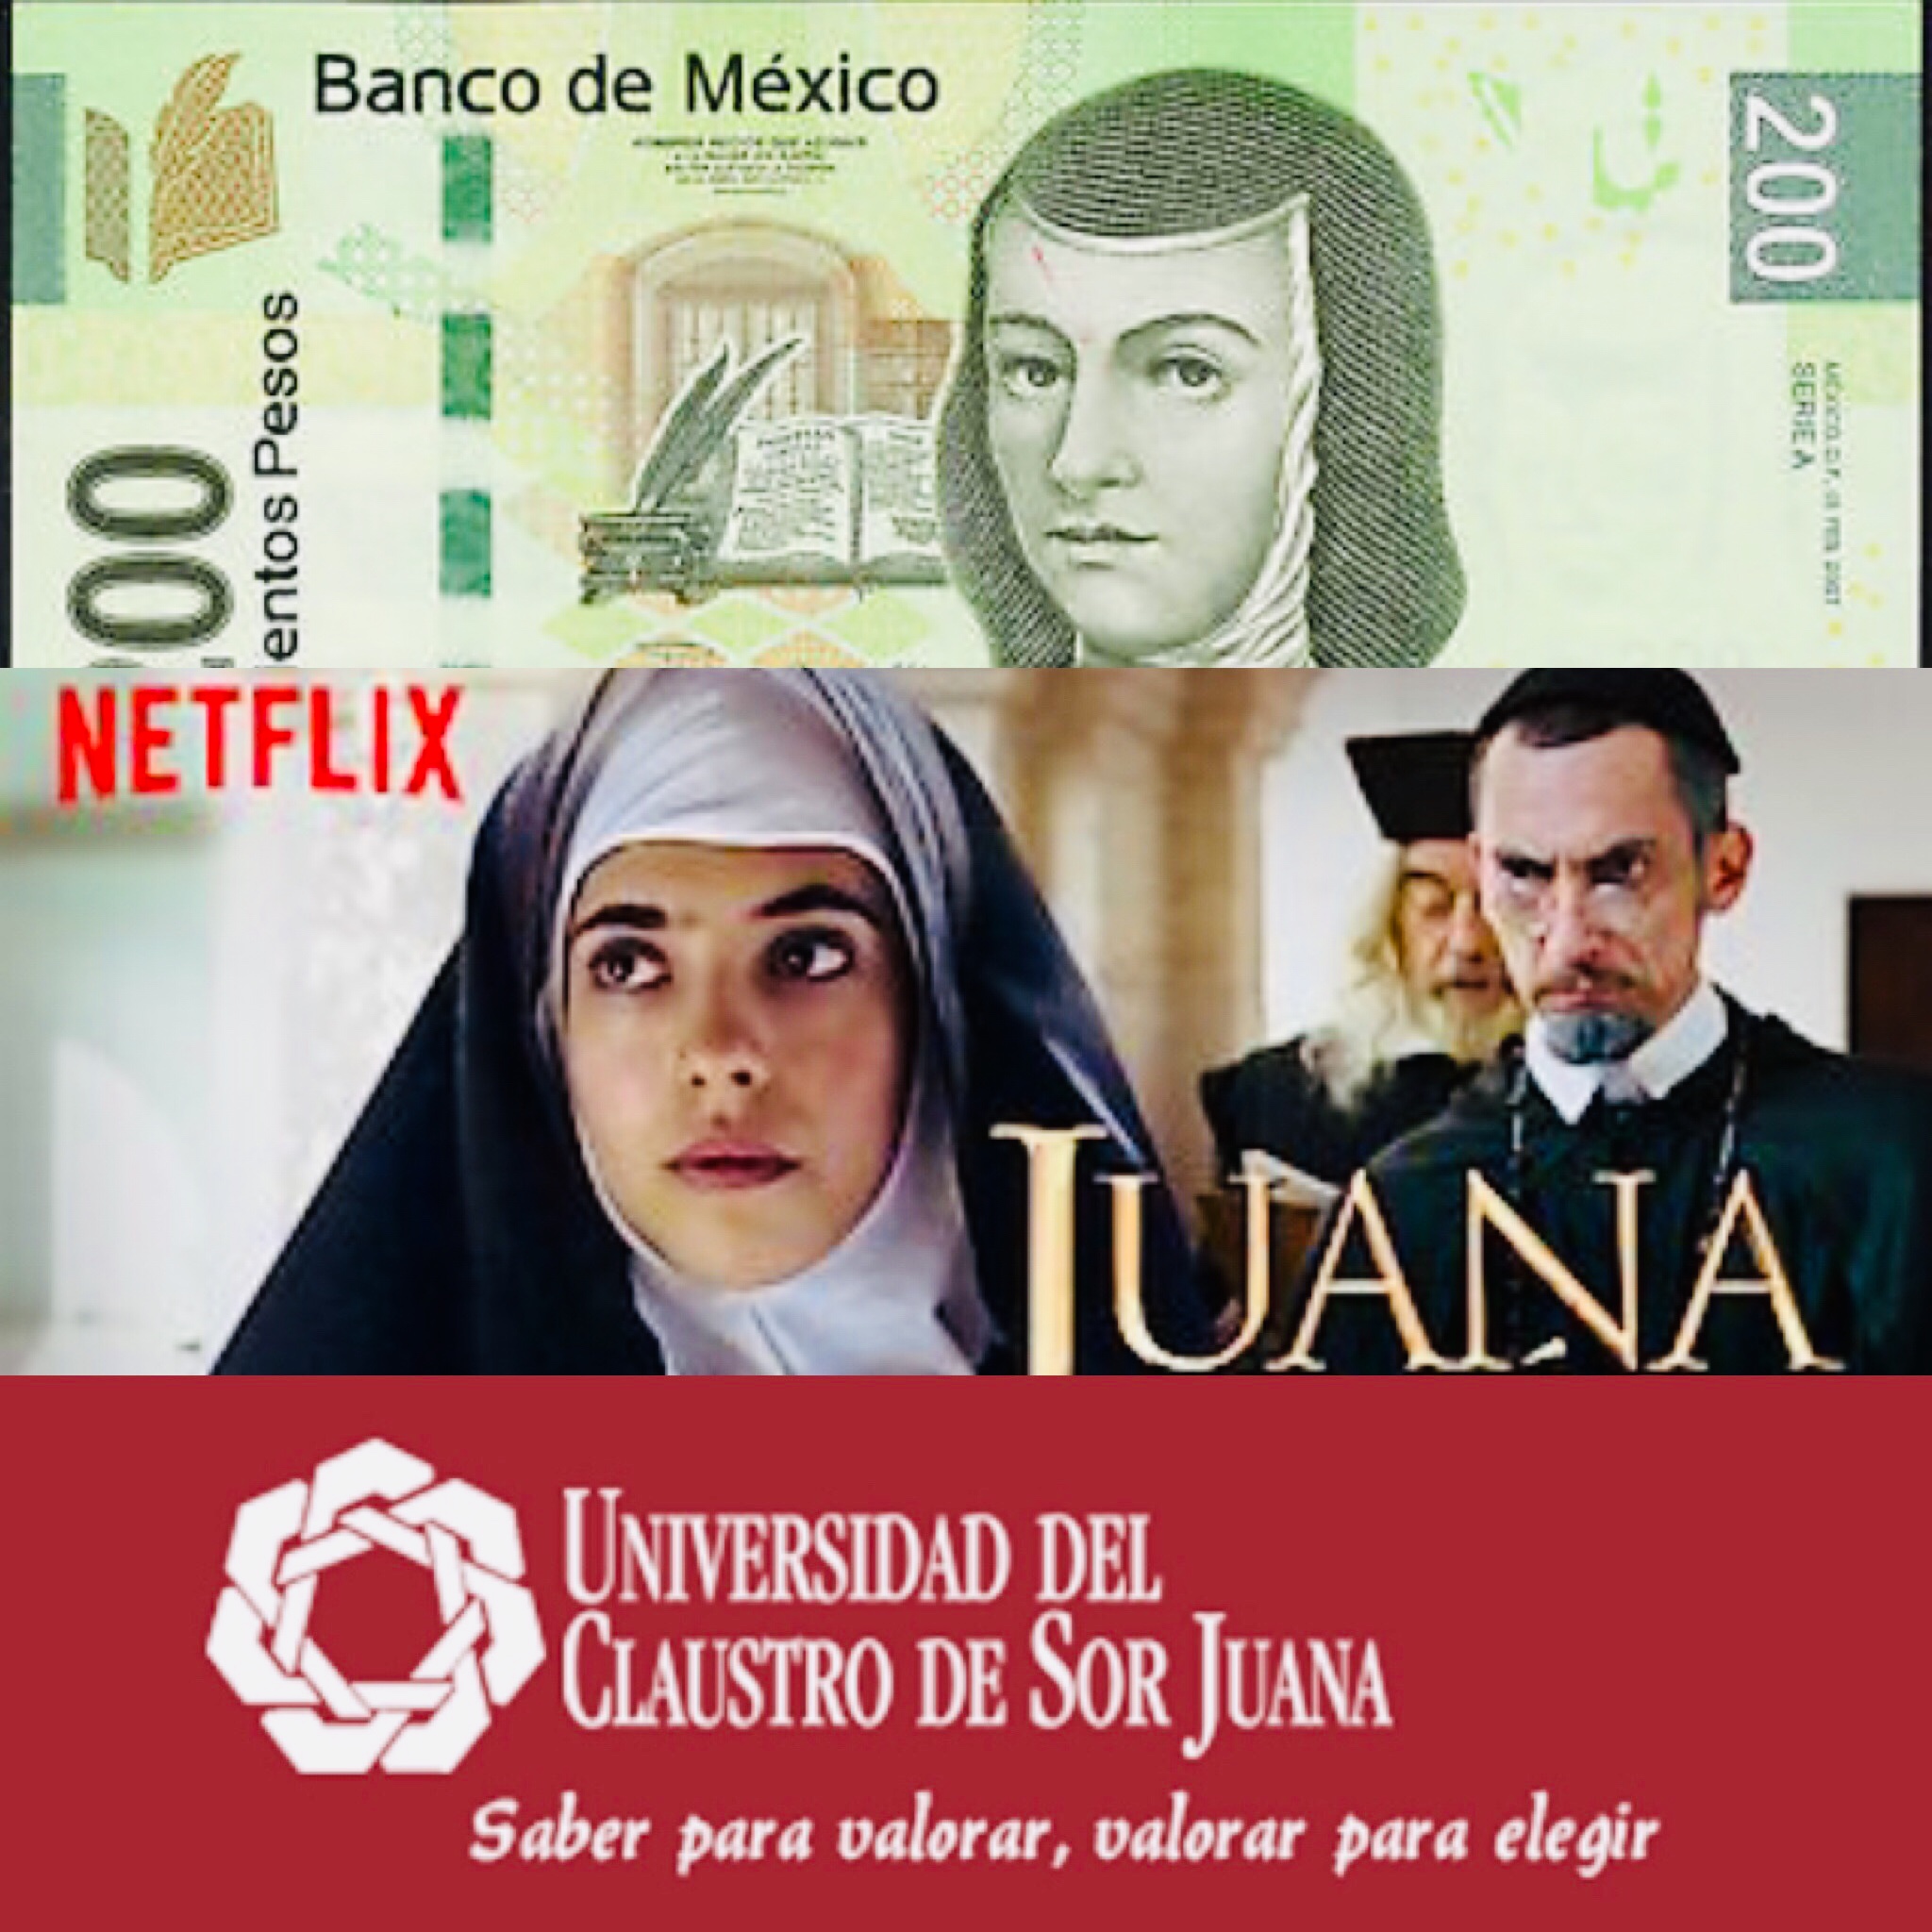 Images of Sor Juana